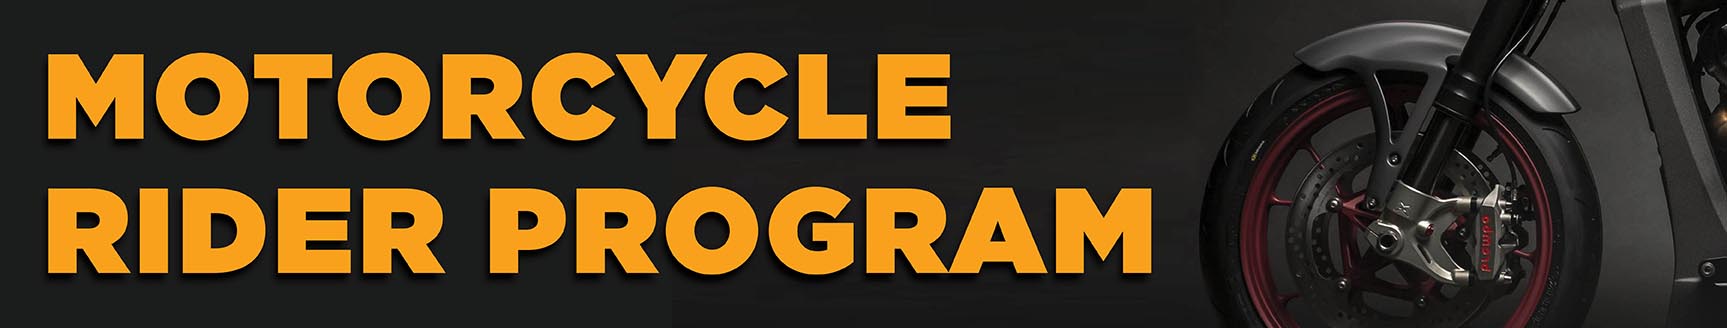 Motorcycle Rider Program